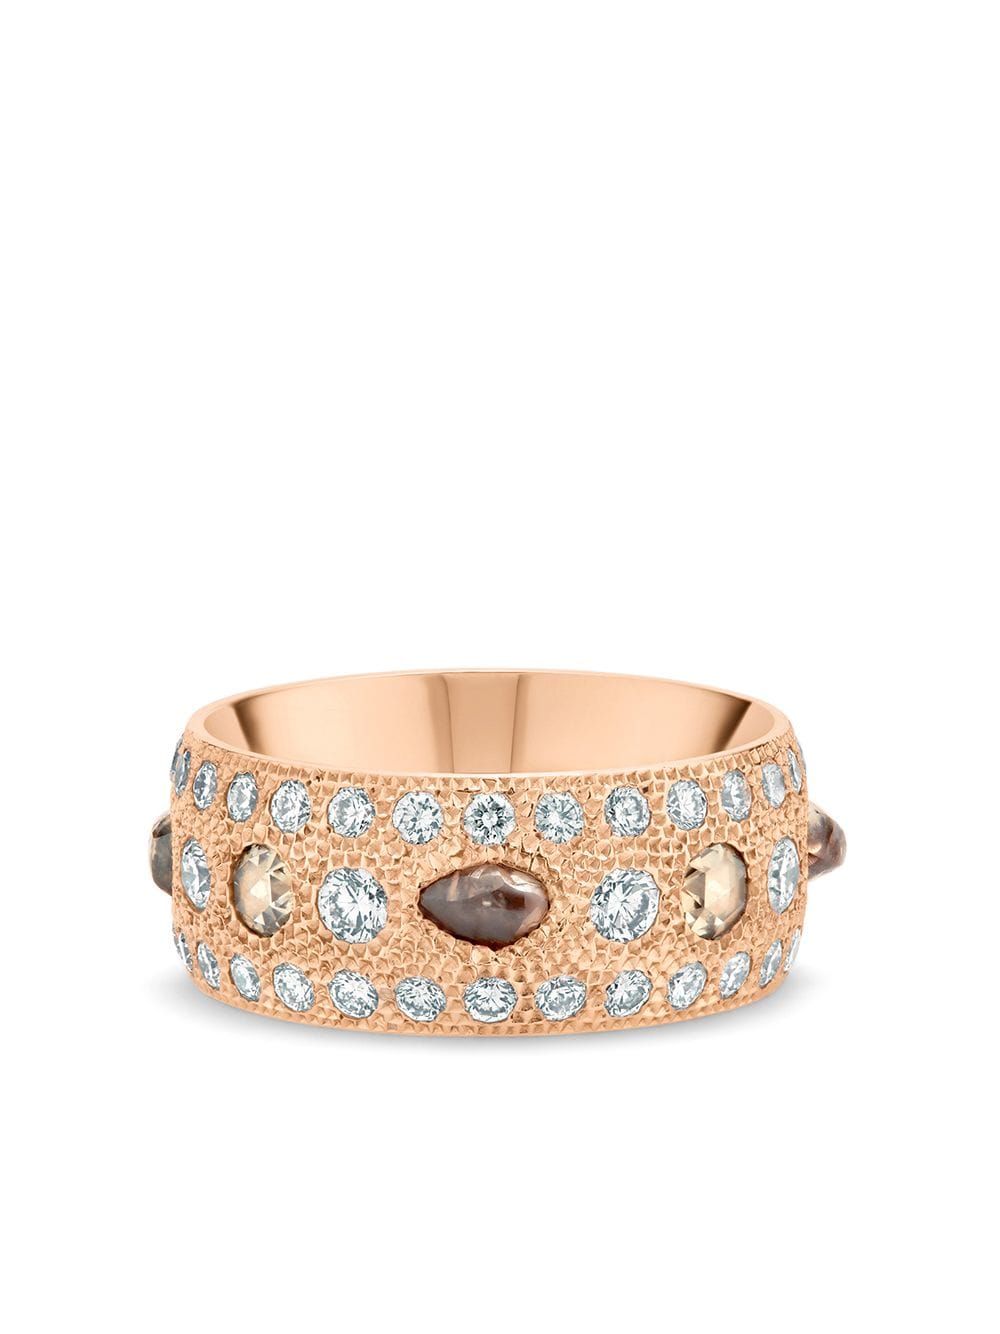 18kt rose gold Talisman diamond large band ring